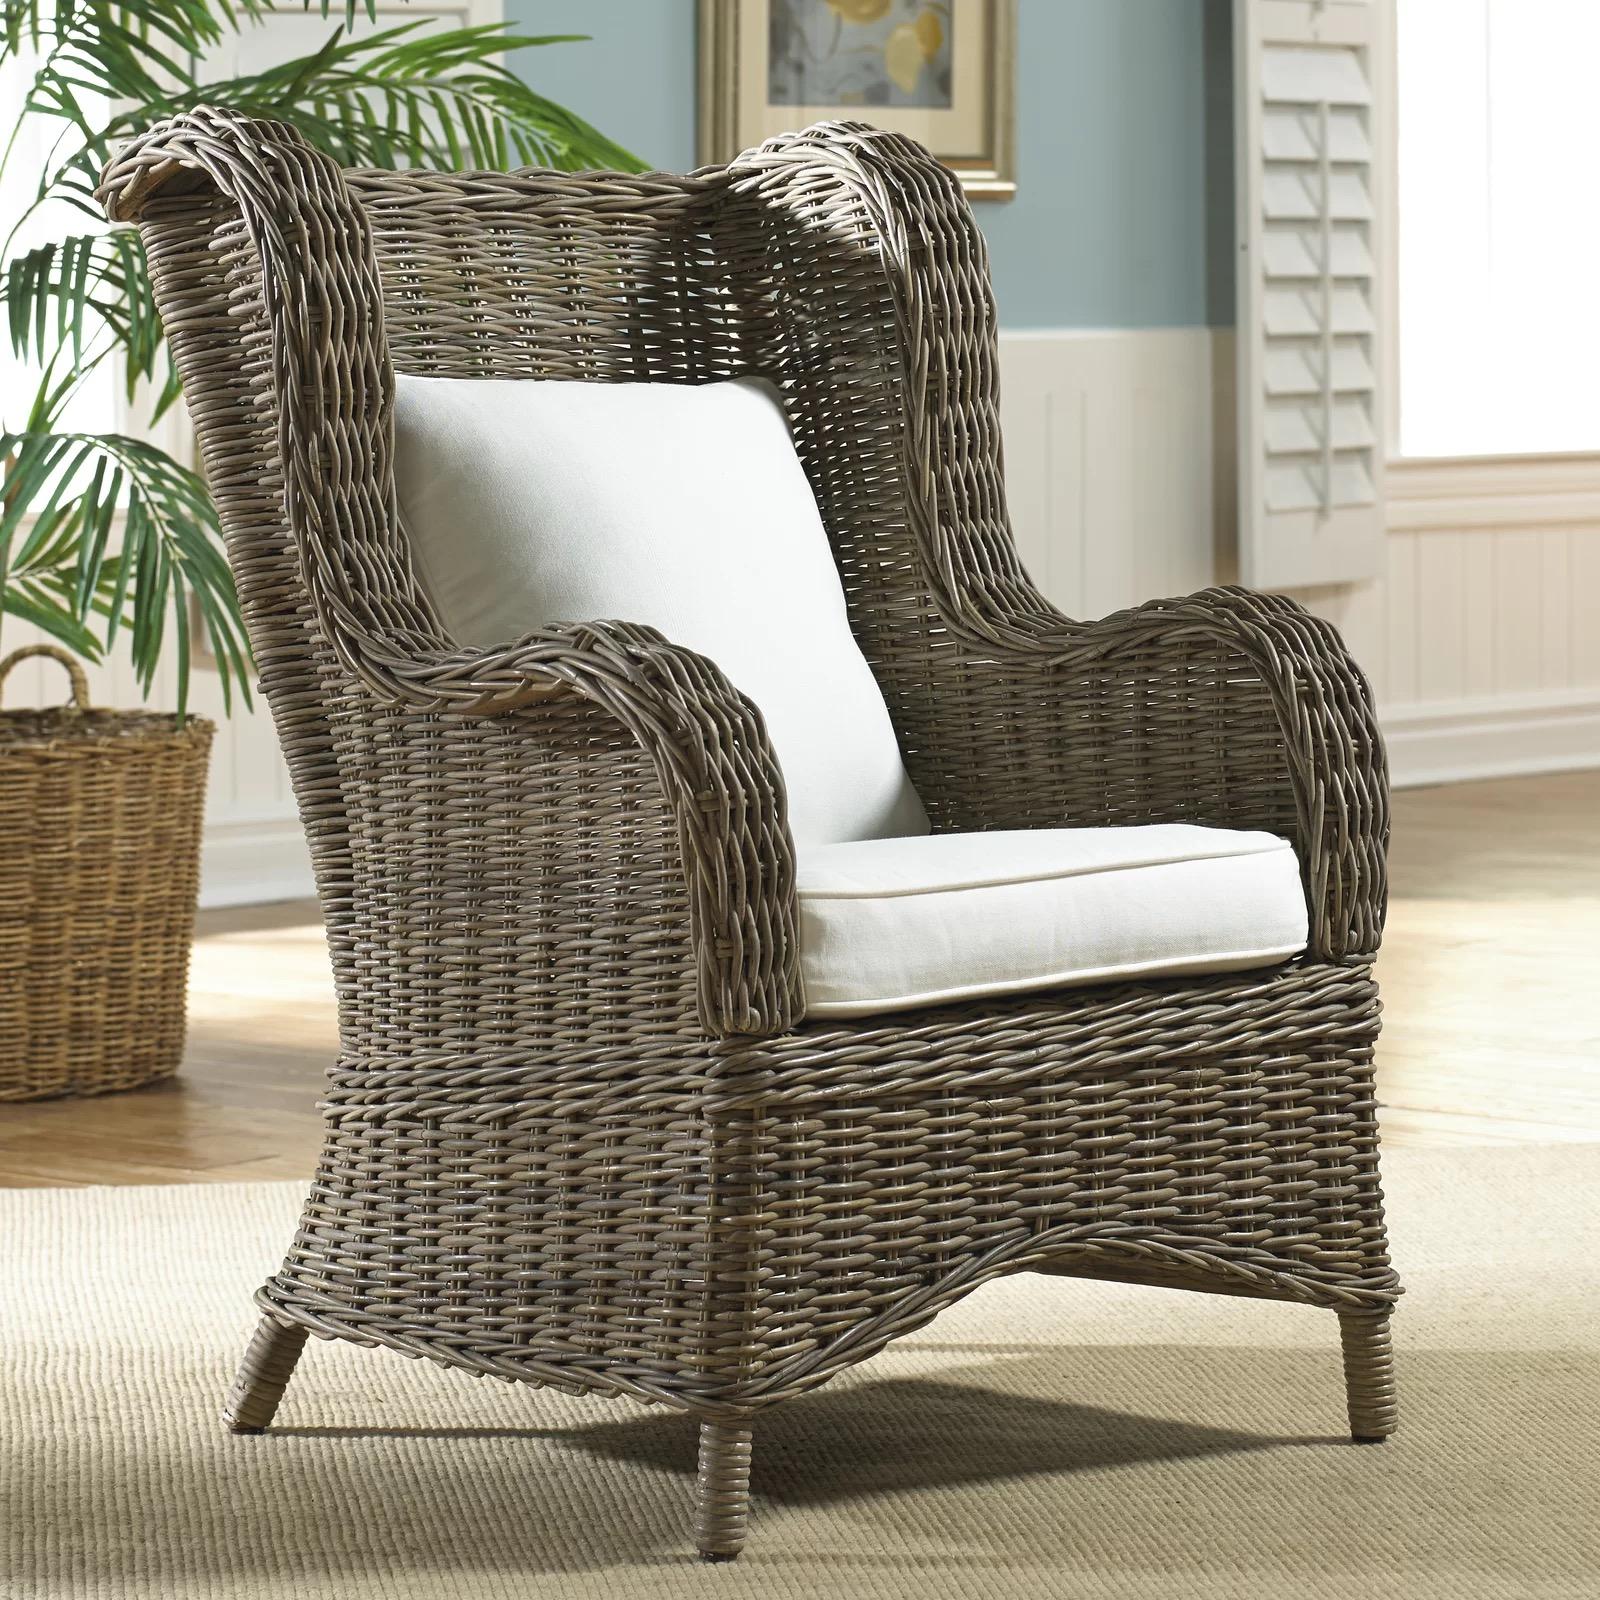 Classic Outdoor Chair Exuma PJS-3001-KBU-OC in Gray, Beige Fabric